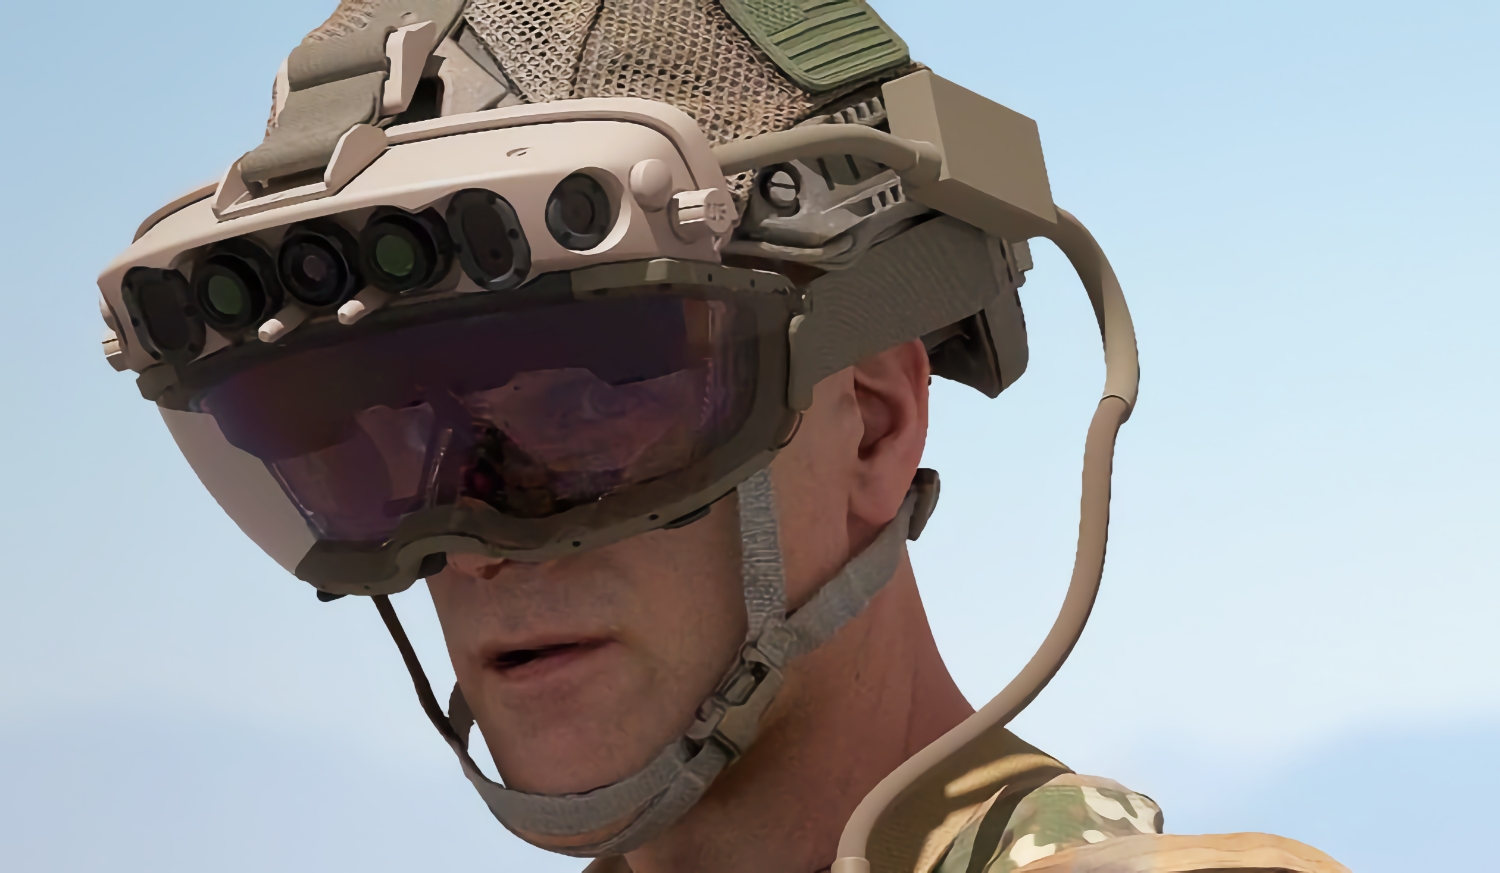 Congress blocks purchase of more Microsoft combat goggles